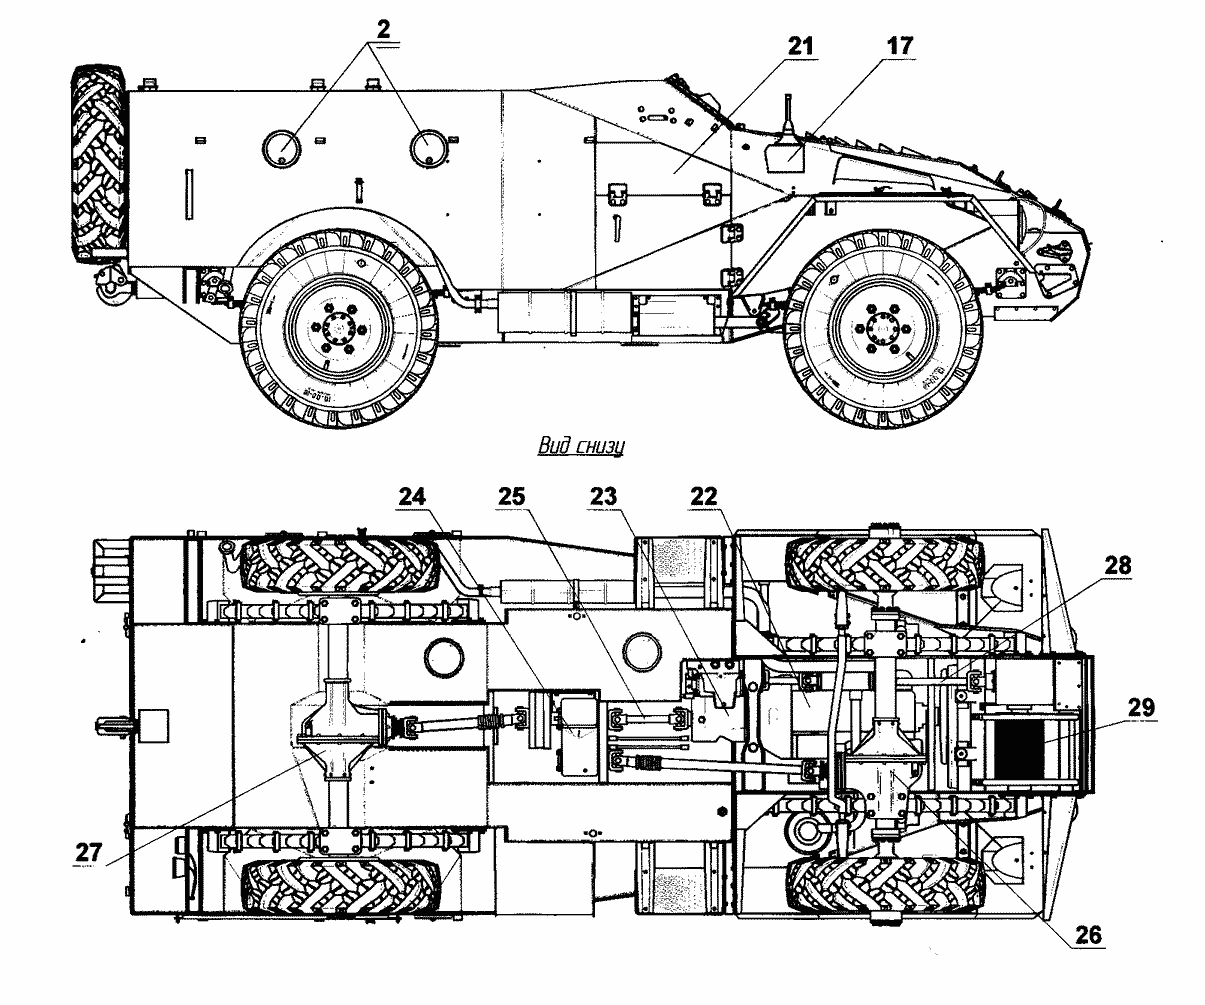 BTR-40 blueprint